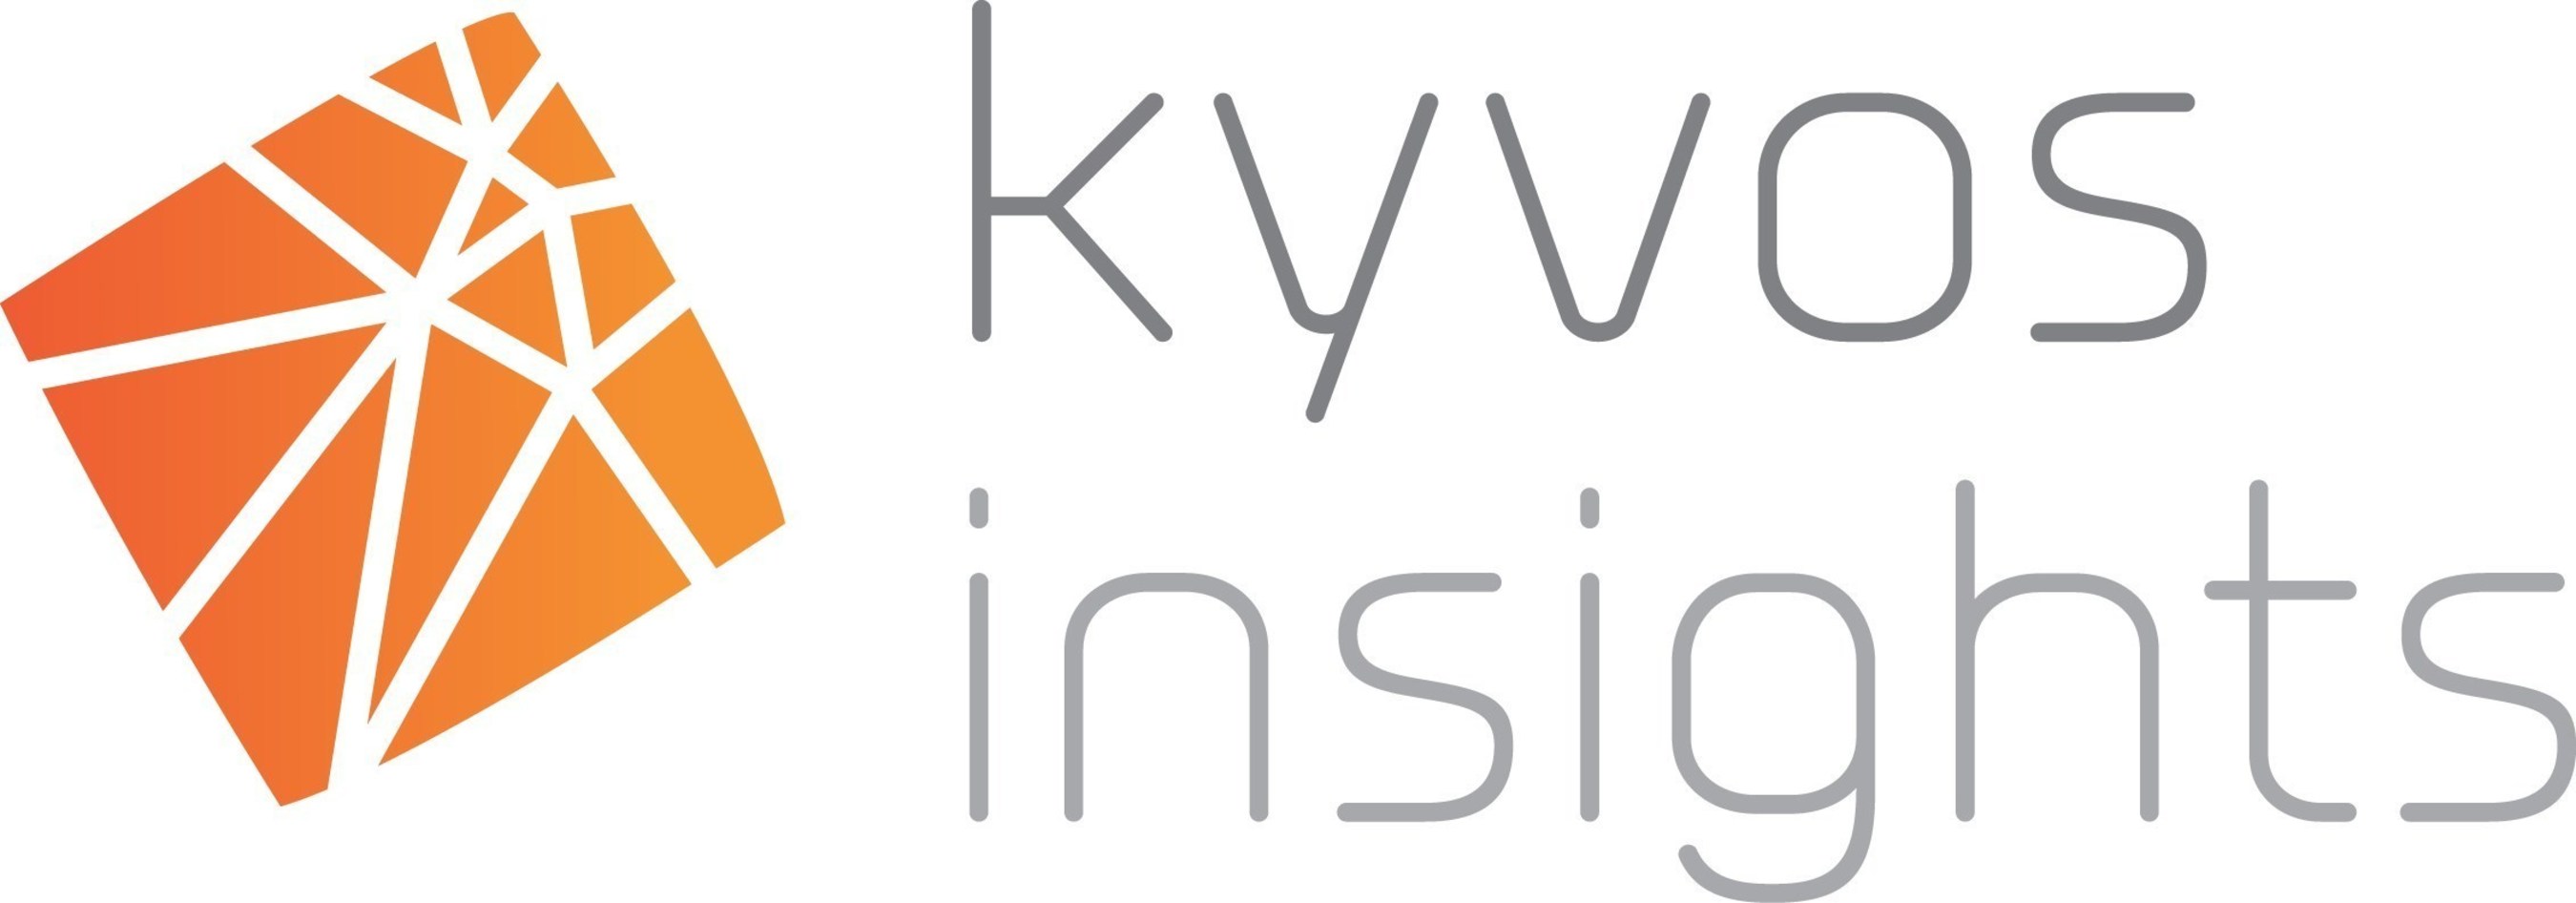 Kyvos Insights is a big data analytics company.